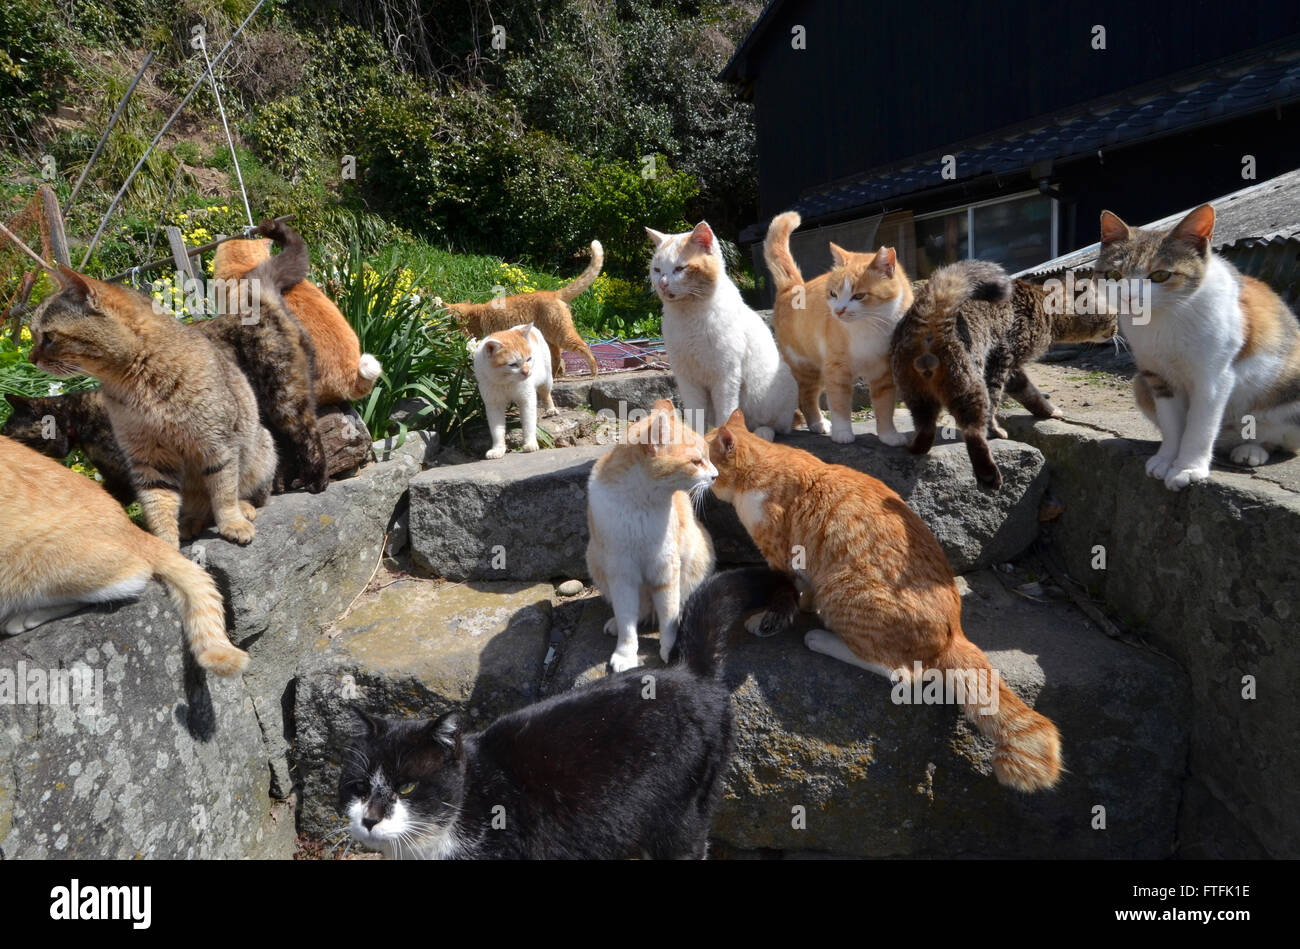 Japan, Shikoku island, Ehime region, Aoshima island, Cat island, local  tourist Stock Photo - Alamy